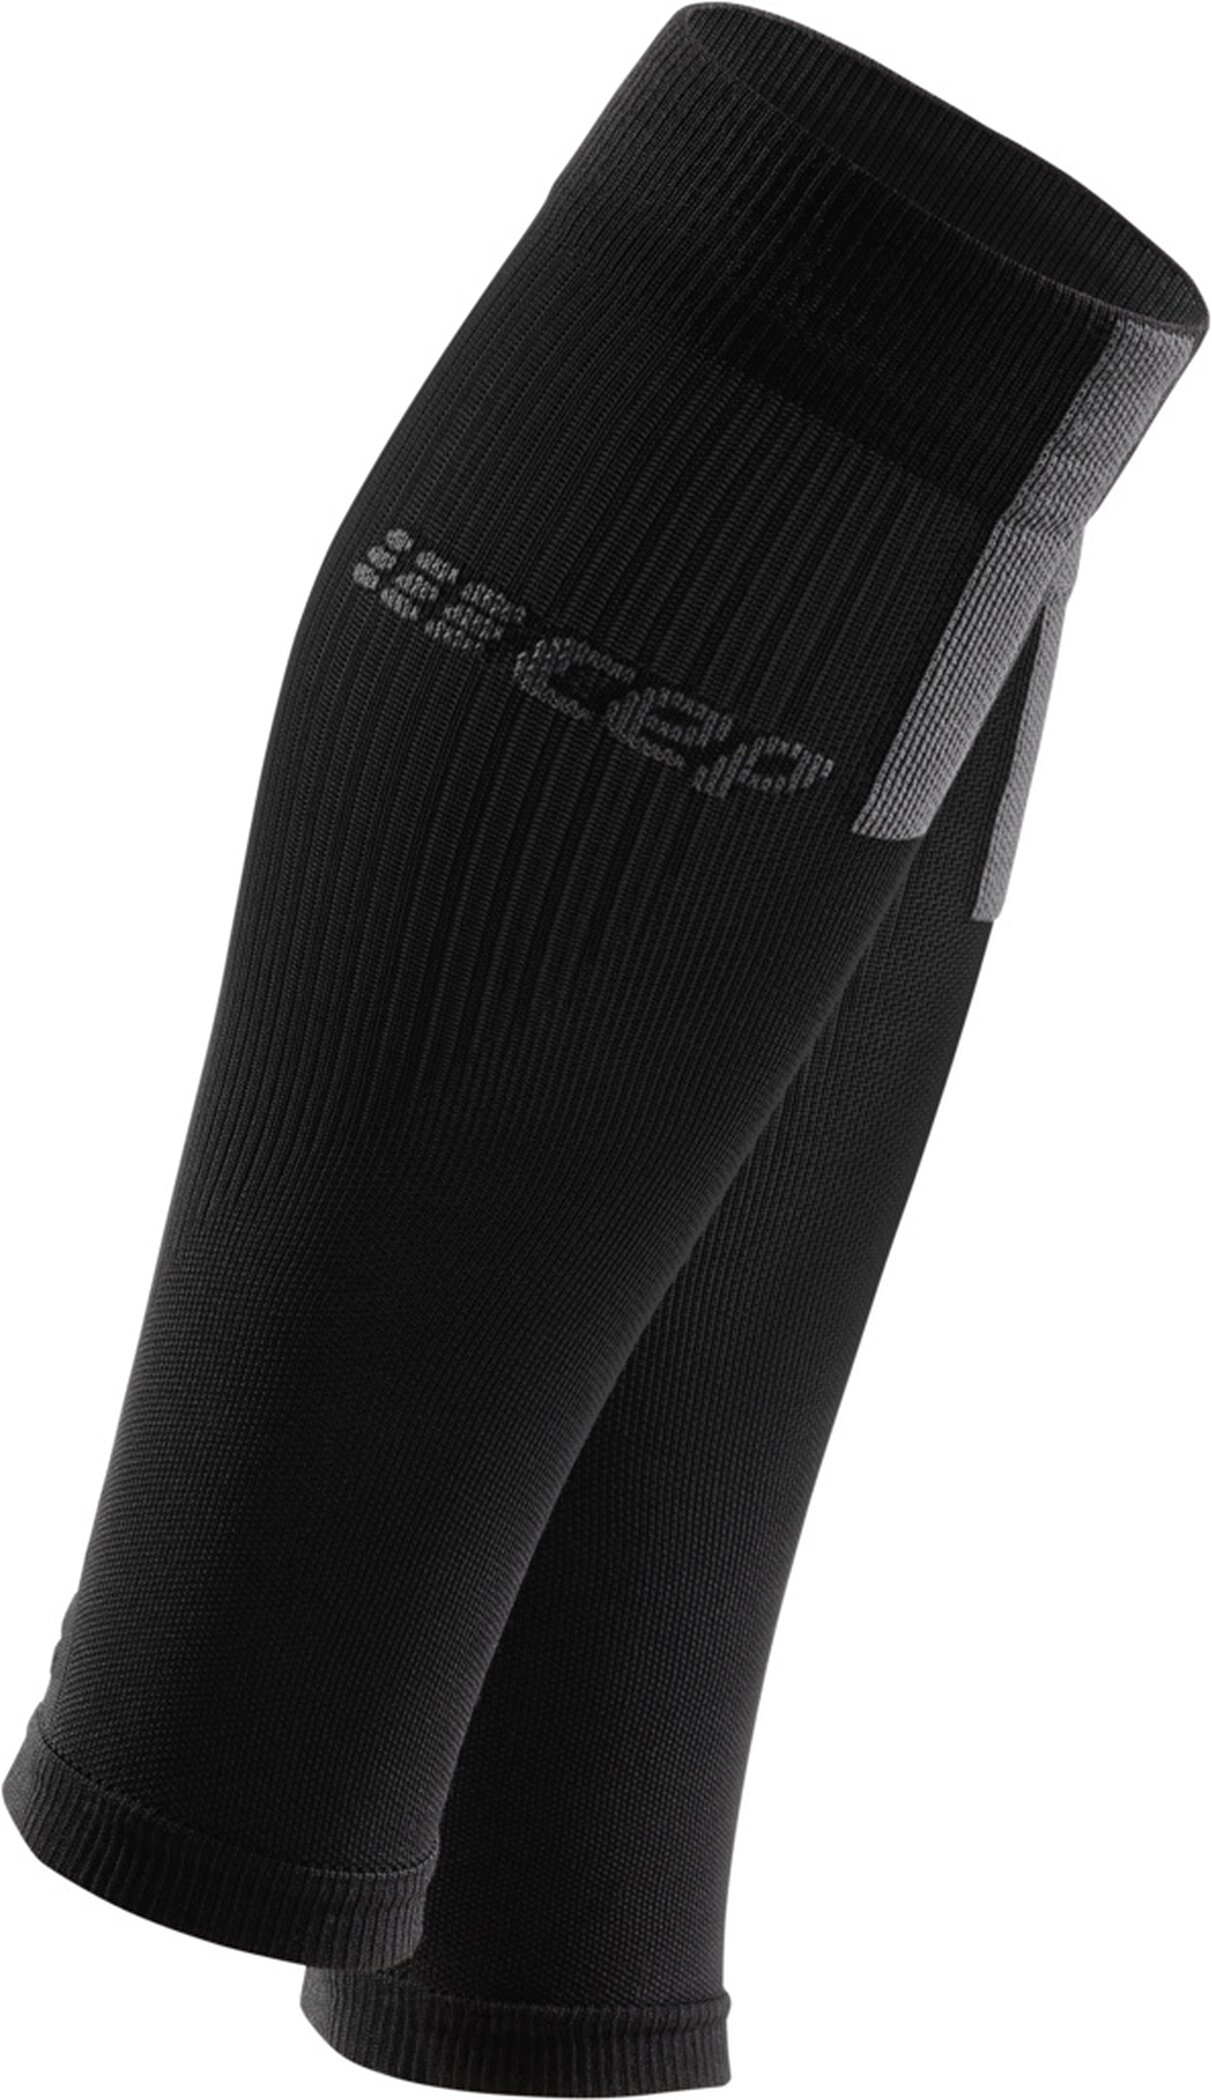 CEP calf sleeves 3.0, women